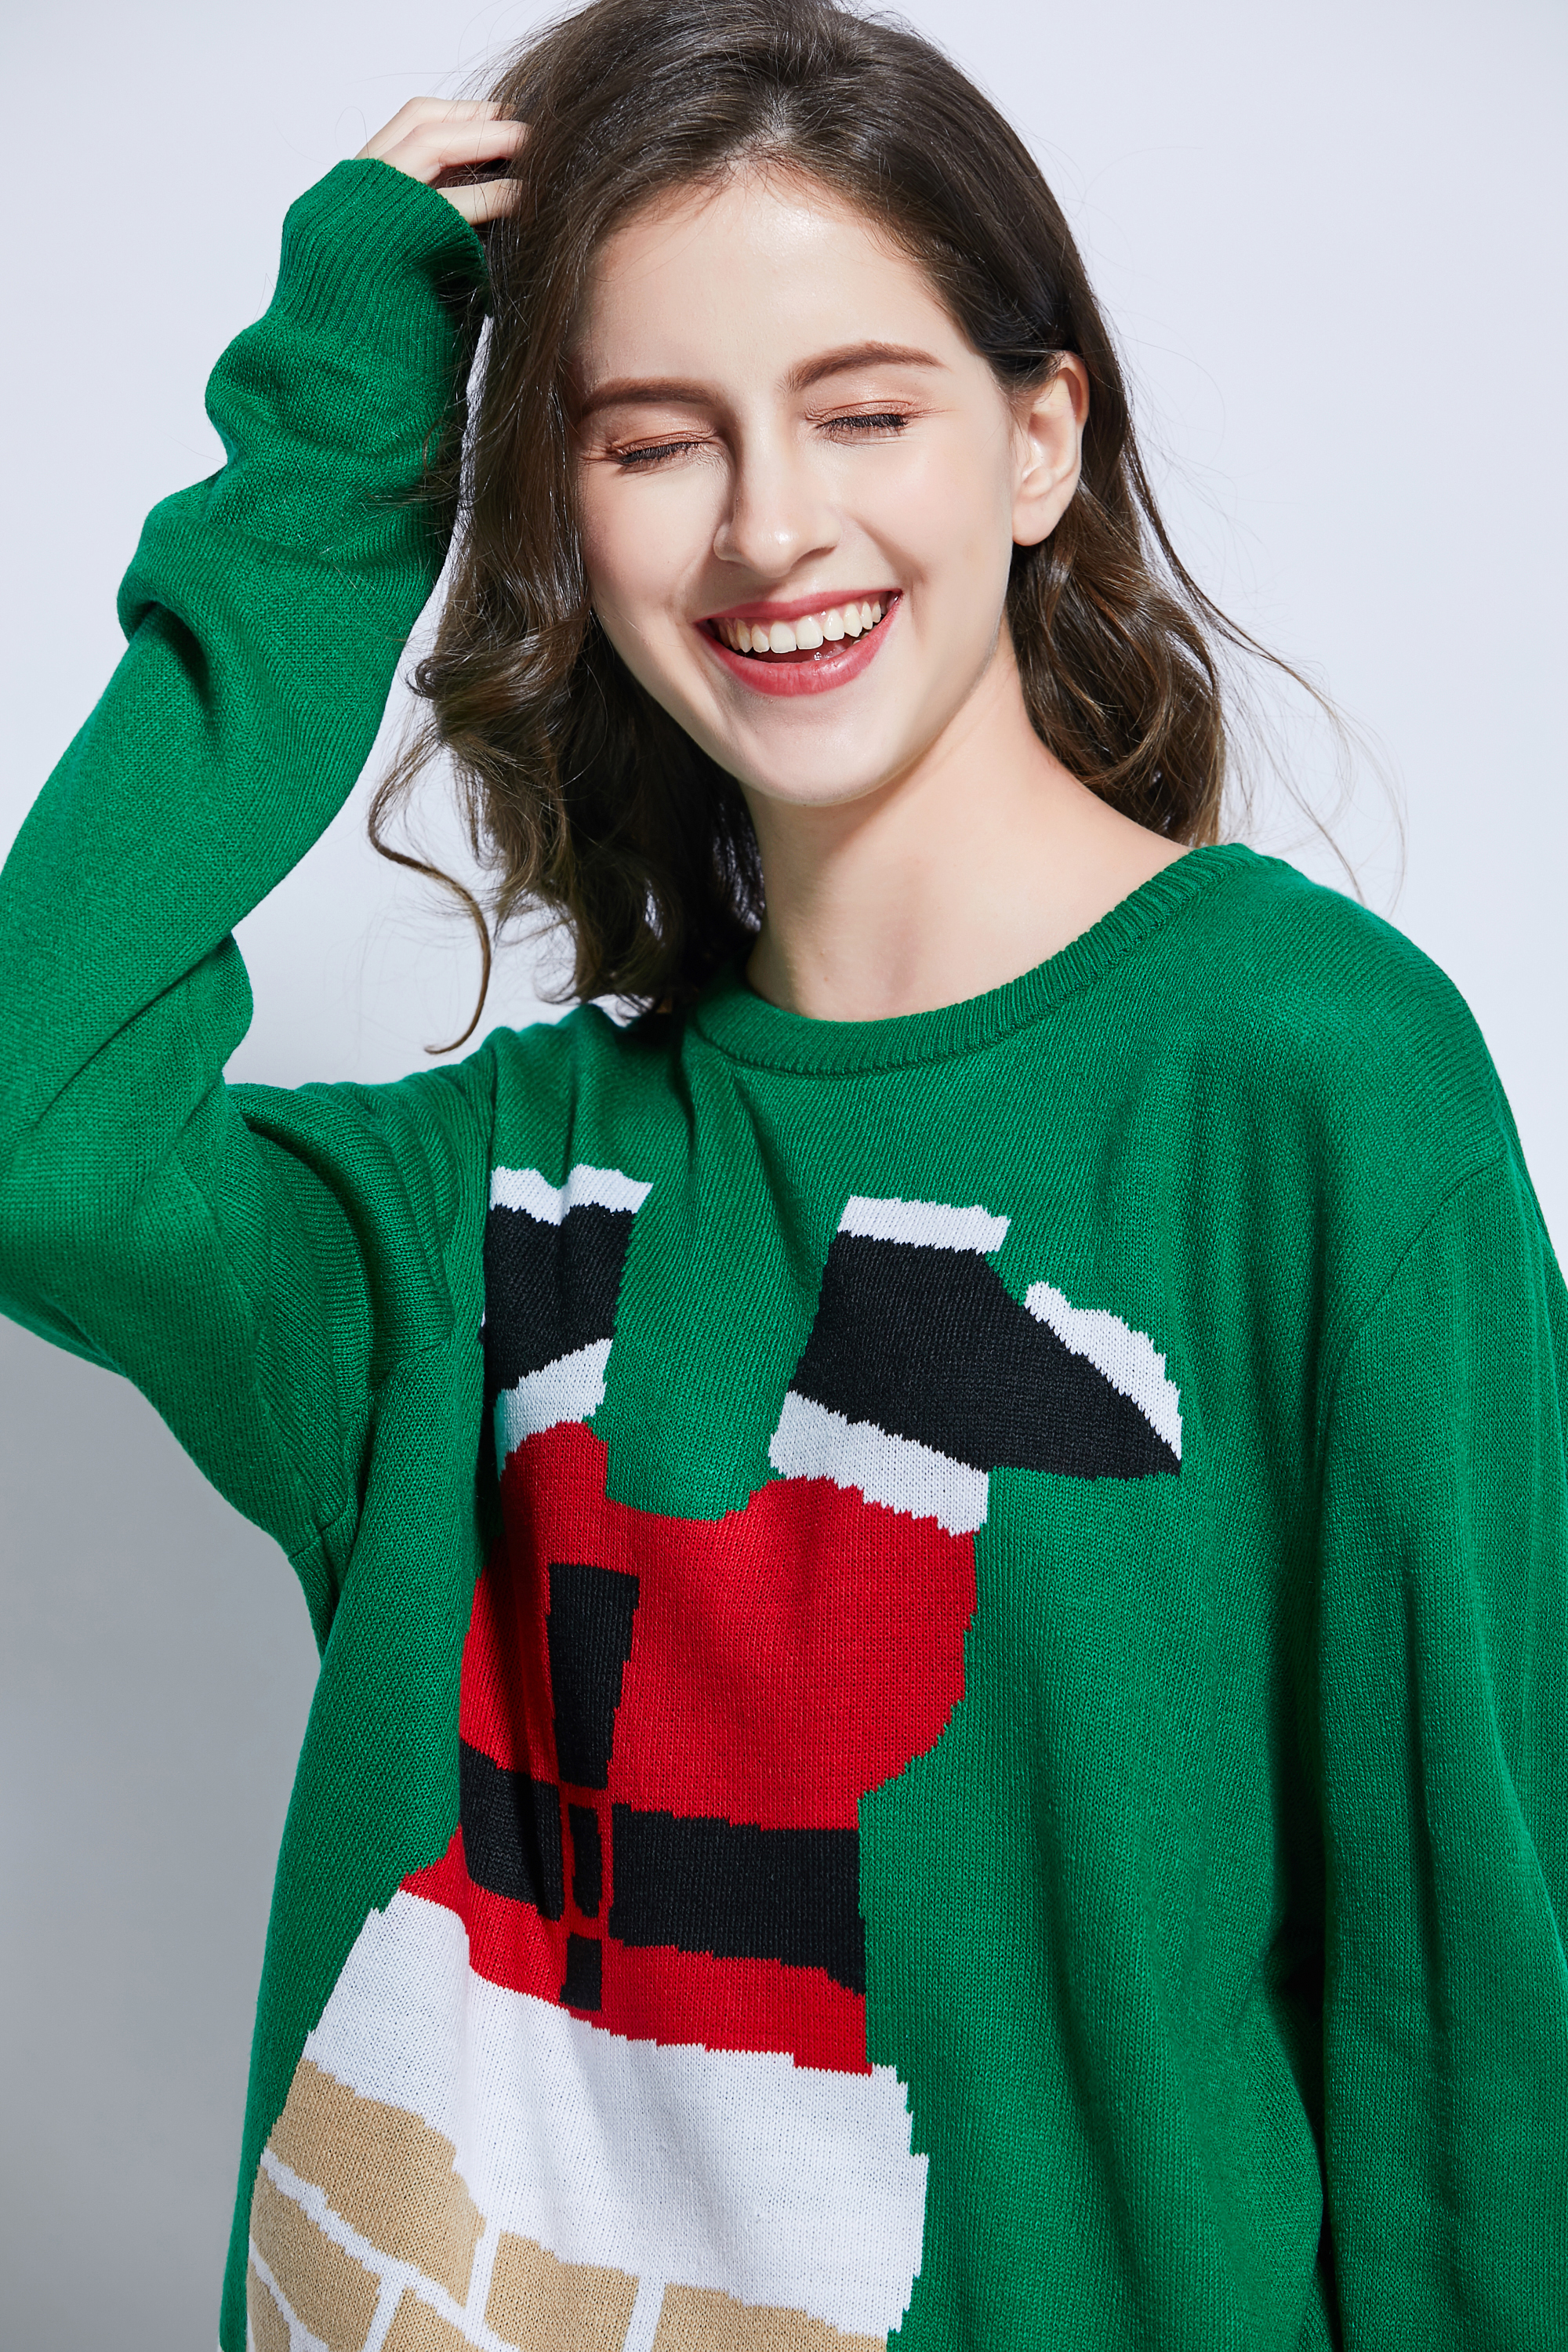 knitted Christmas design green Santa Christmas sweater Xmas sweater